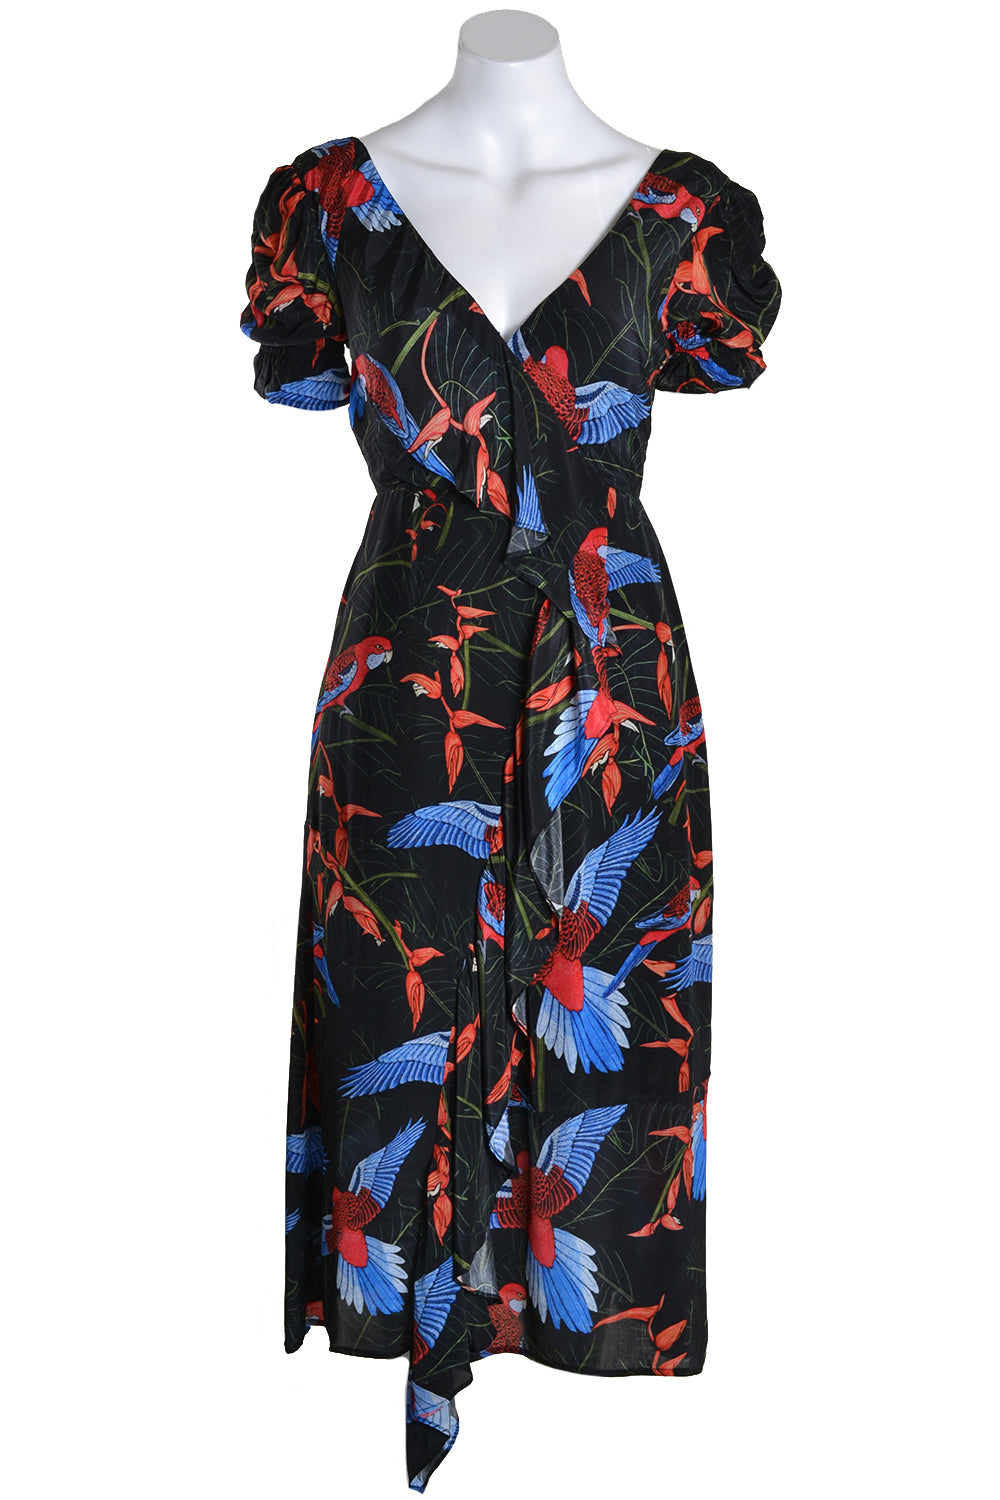 Blank London Dress INEAZRA Midi Parrot Black - Sub Couture